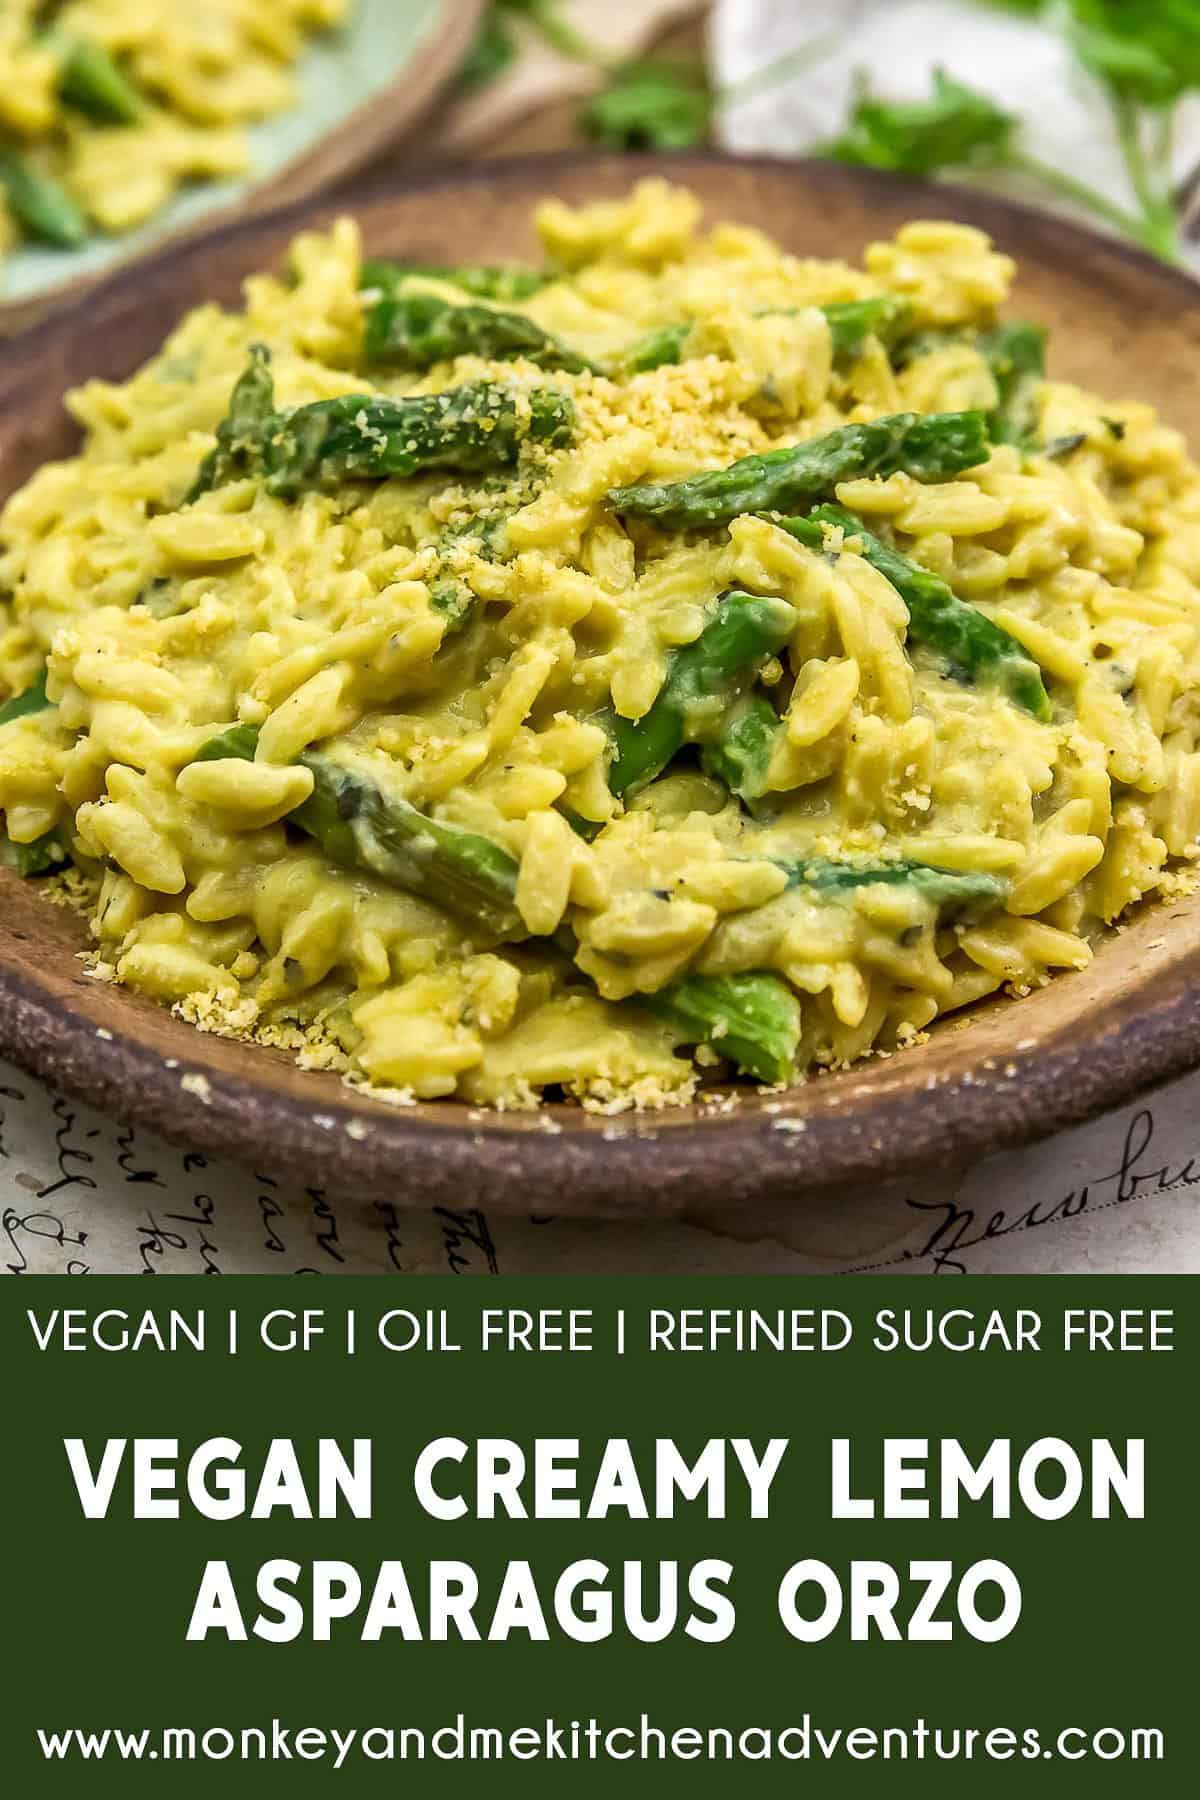 Vegan Creamy Lemon Asparagus Orzo with text description